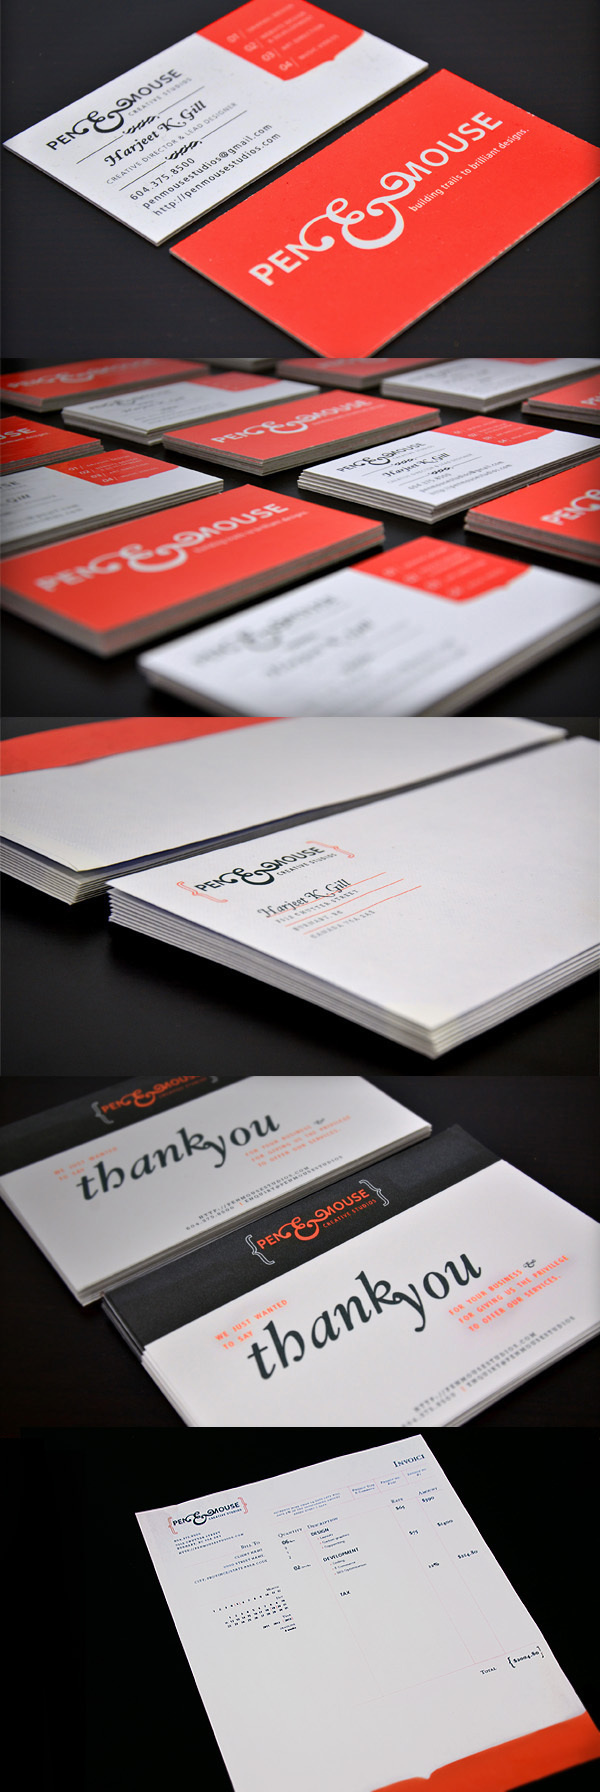 Invoice design idea #192: Pen&Mouse - Personal Branding #envelopes #invoice #business #stationary #branding #you #card #tha...